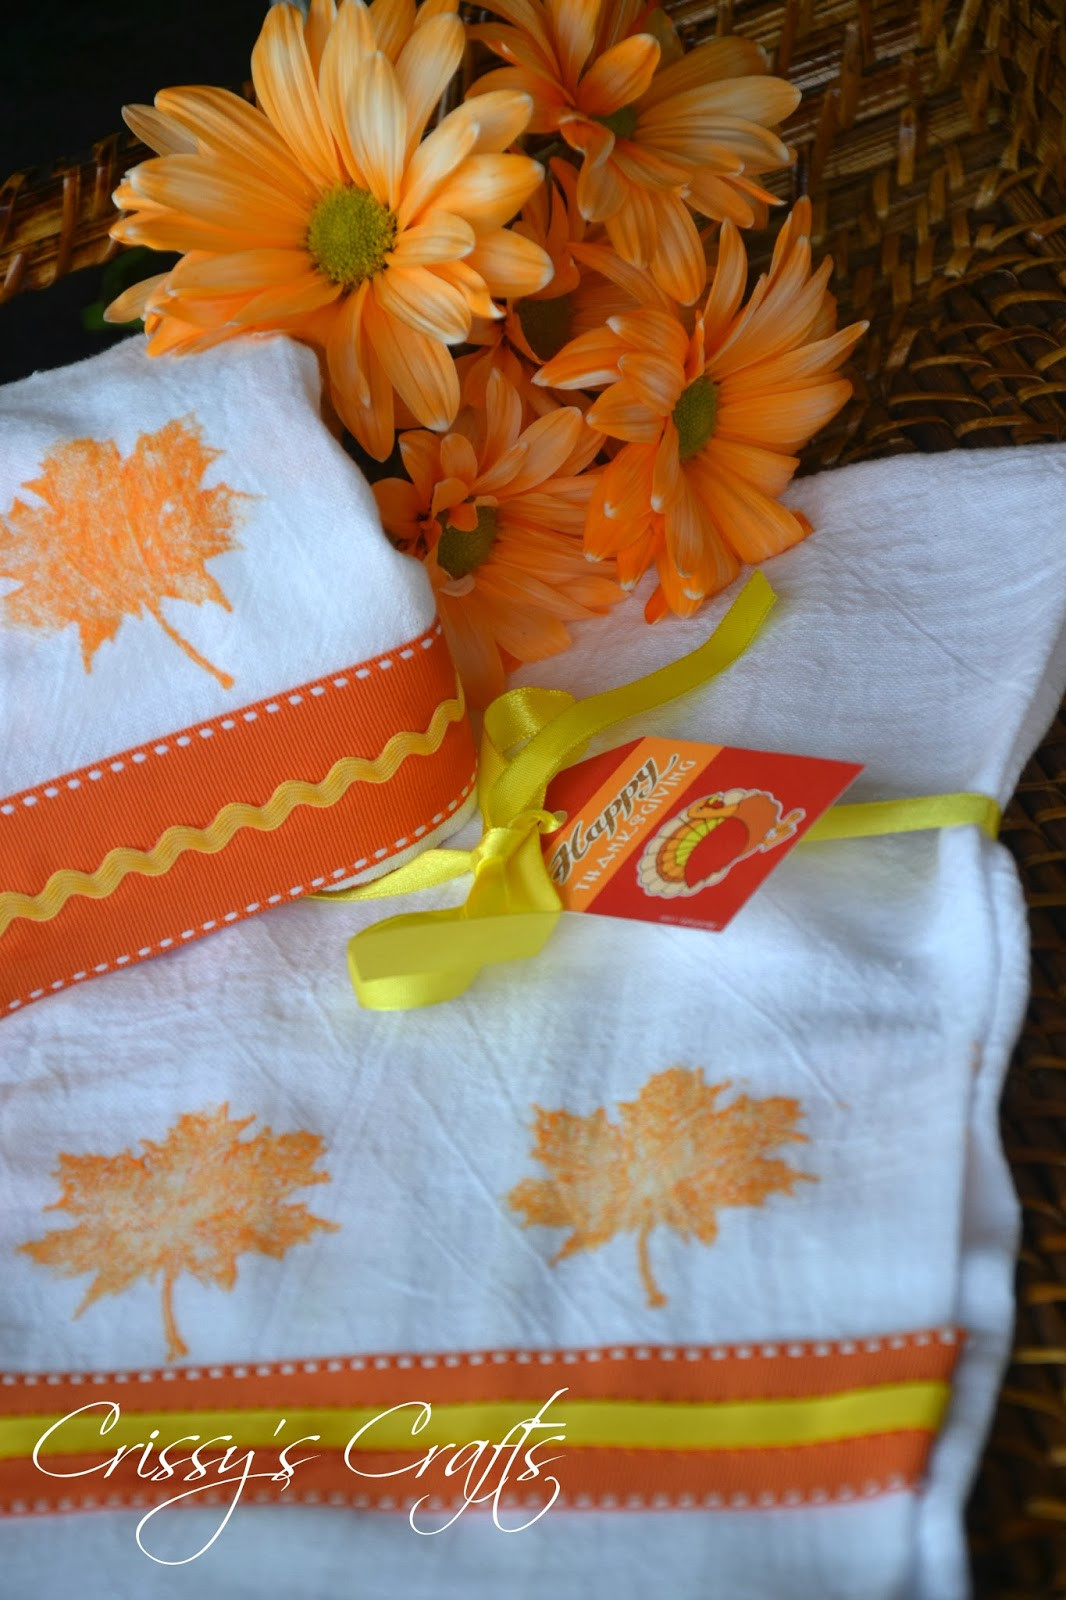 Thanksgiving Hostess Gift Ideas Homemade
 Crissy s Crafts Thanksgiving Hostess Gift and Blog Hop